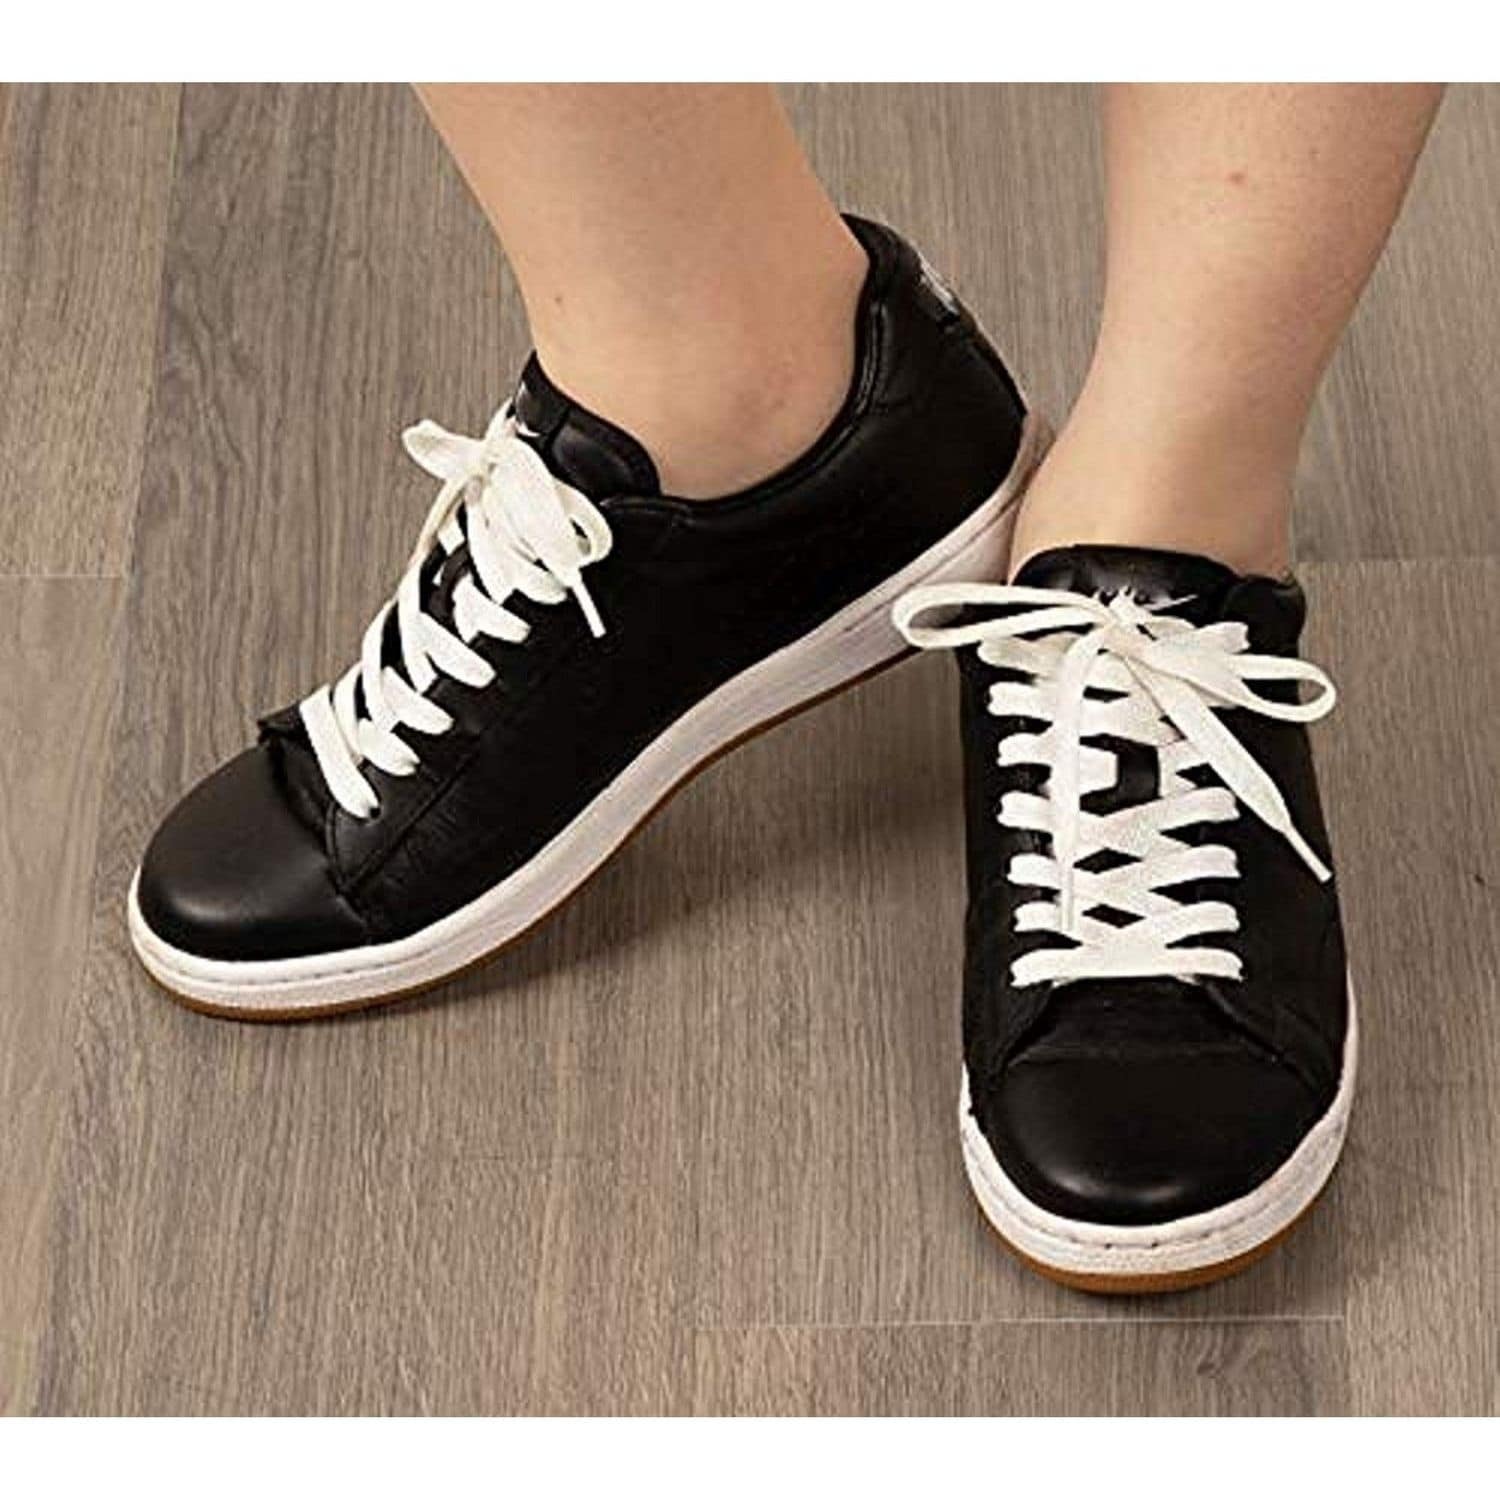 black glitter shoelaces